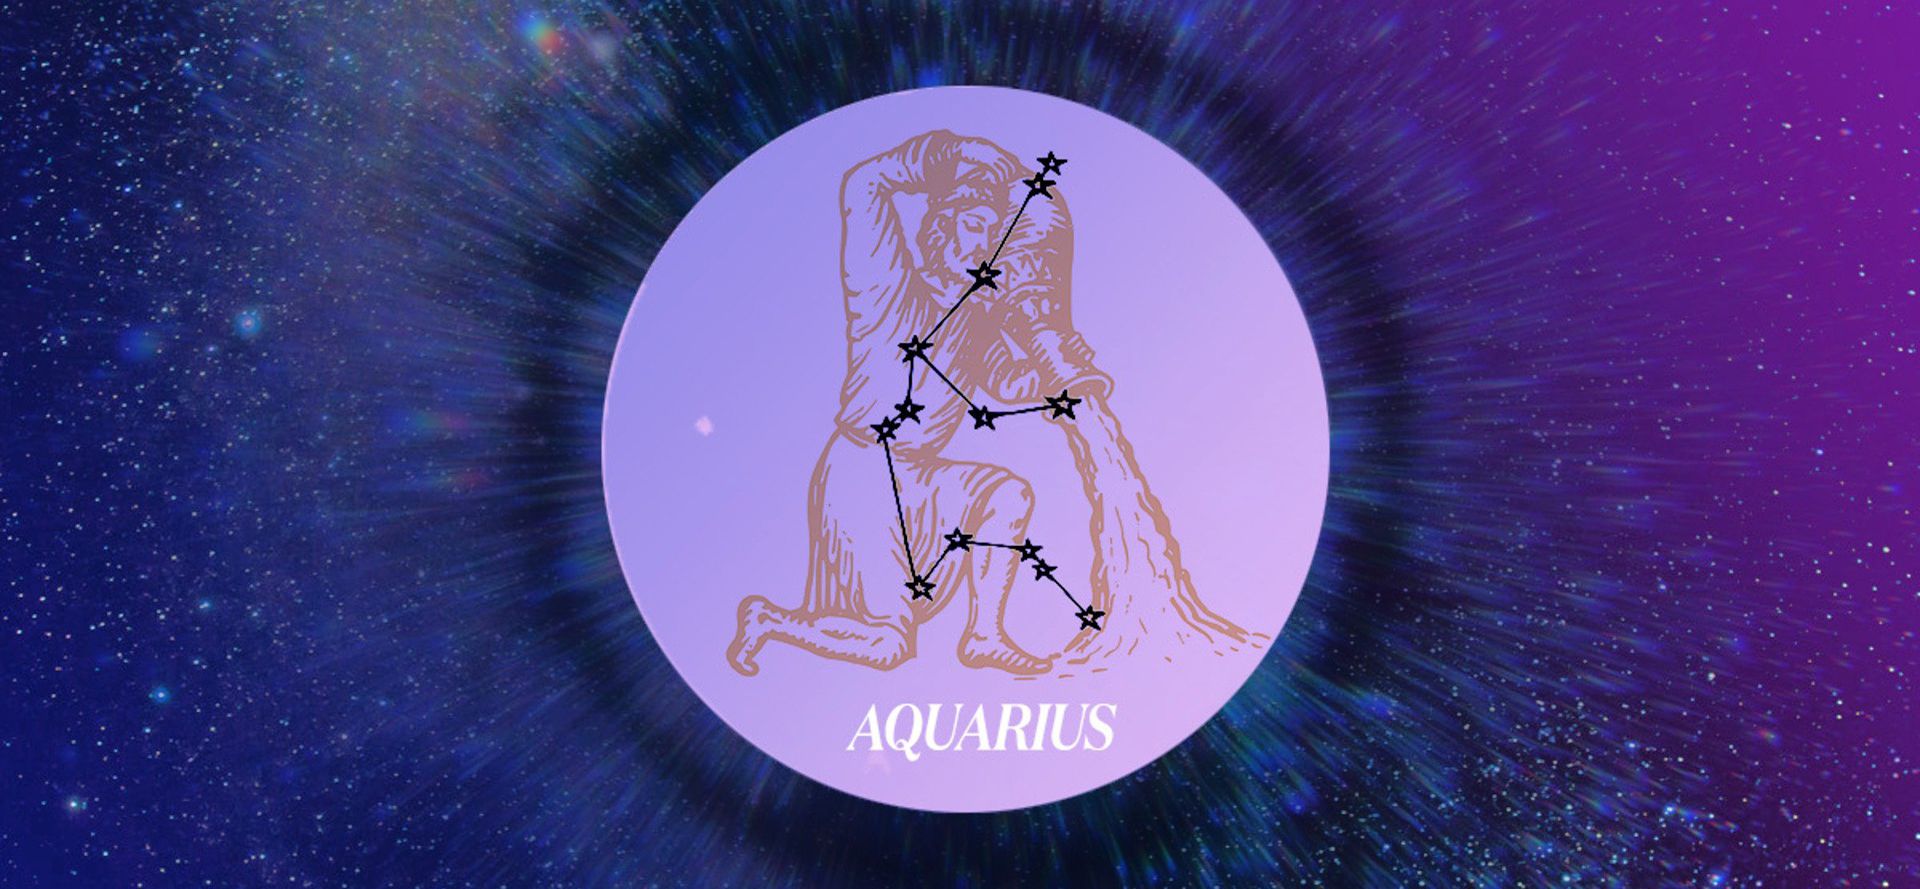 January Aquarius and February Aquarius.